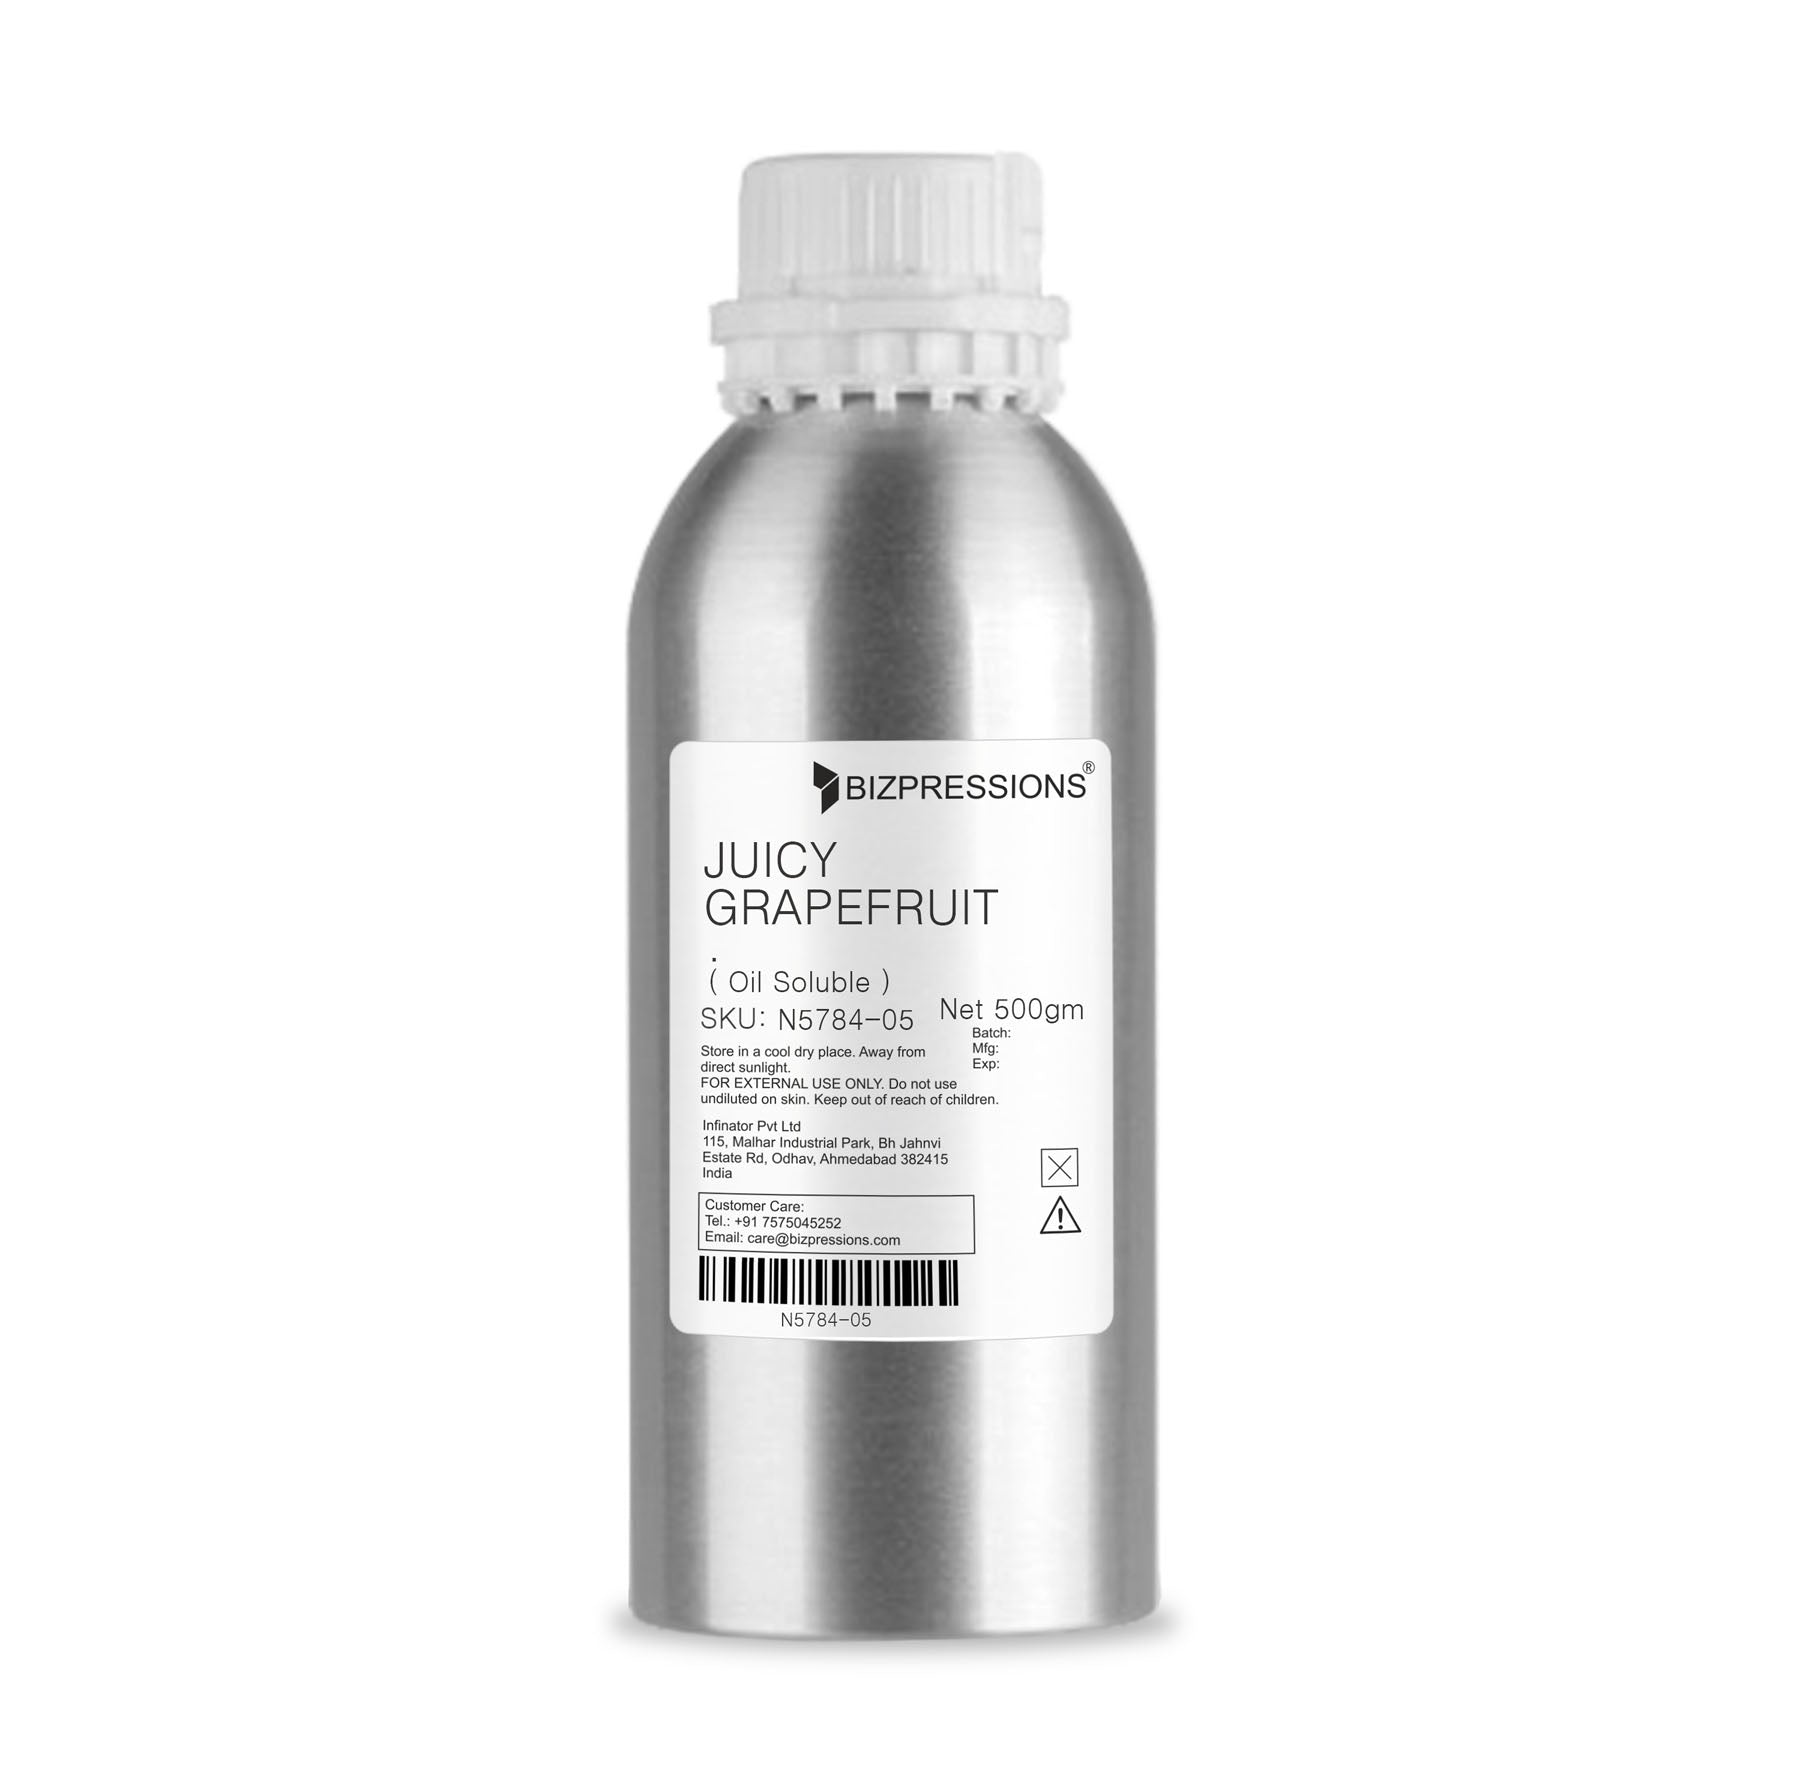 JUICY GRAPEFRUIT - Fragrance ( Oil Soluble ) - 500 gm